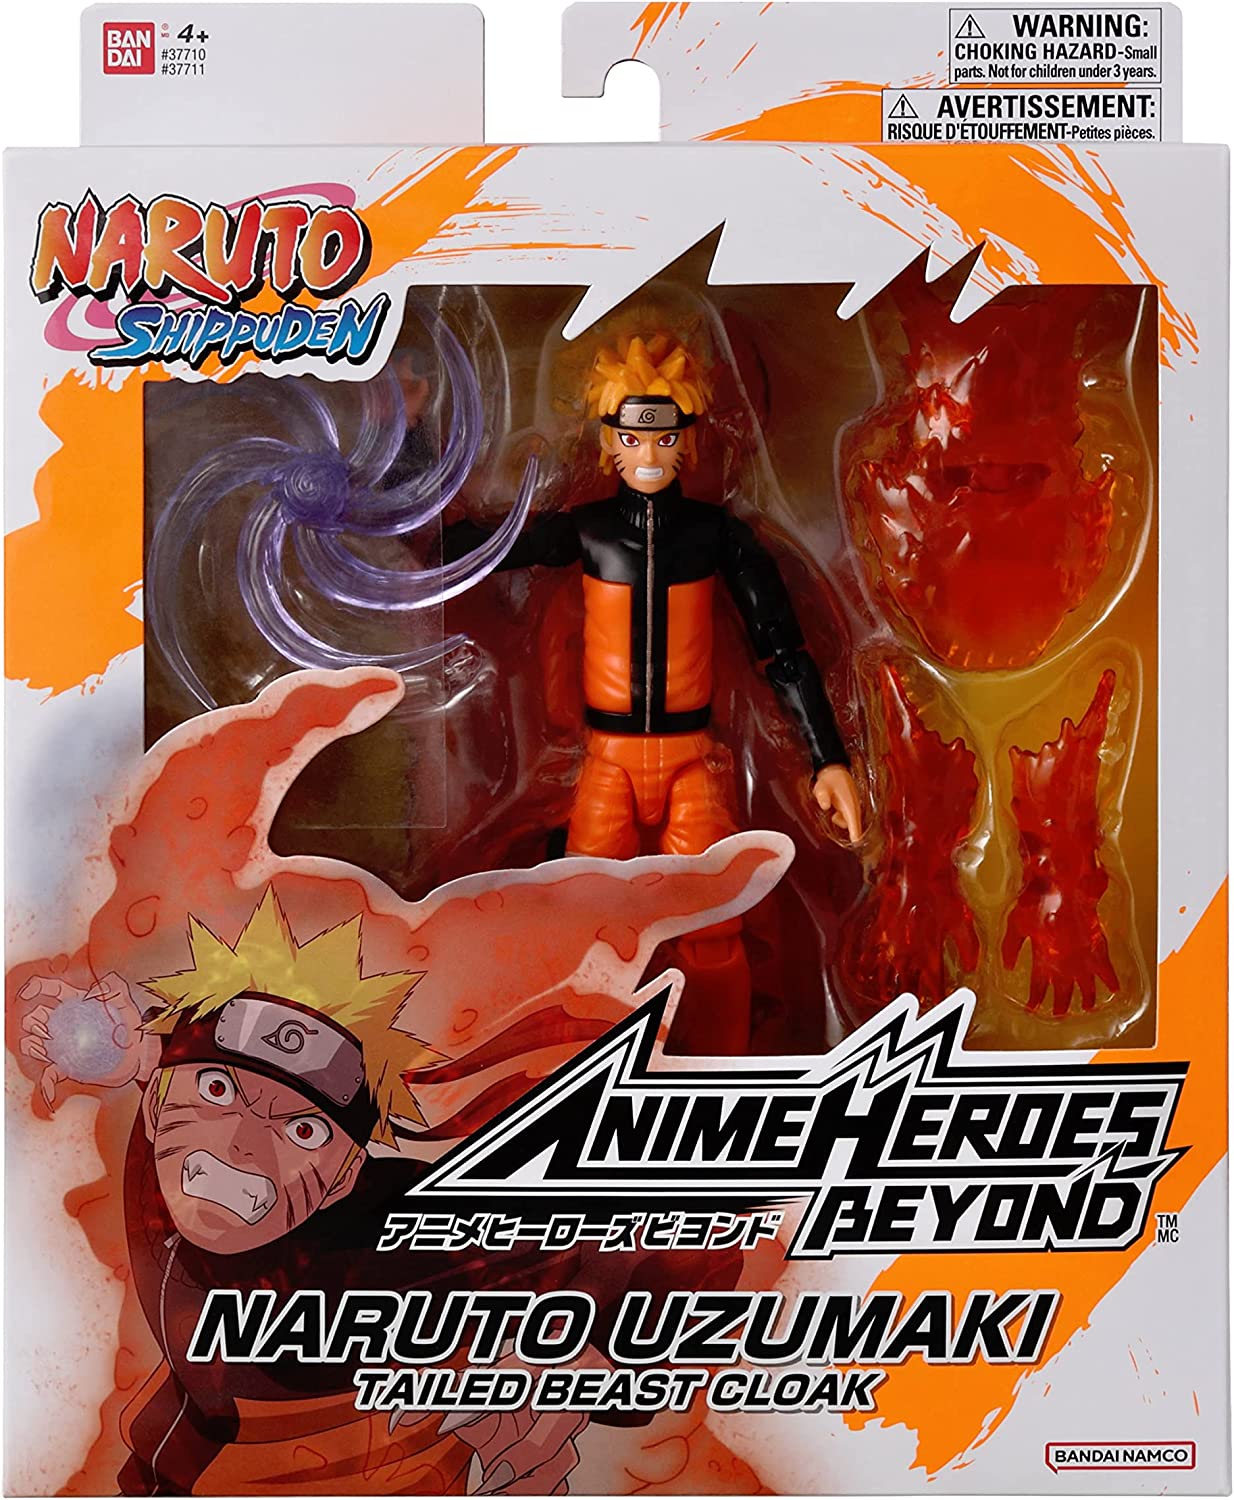 Bandai Anime Heroes Beyond Naruto Series - Naruto Uzumaki With Accessory